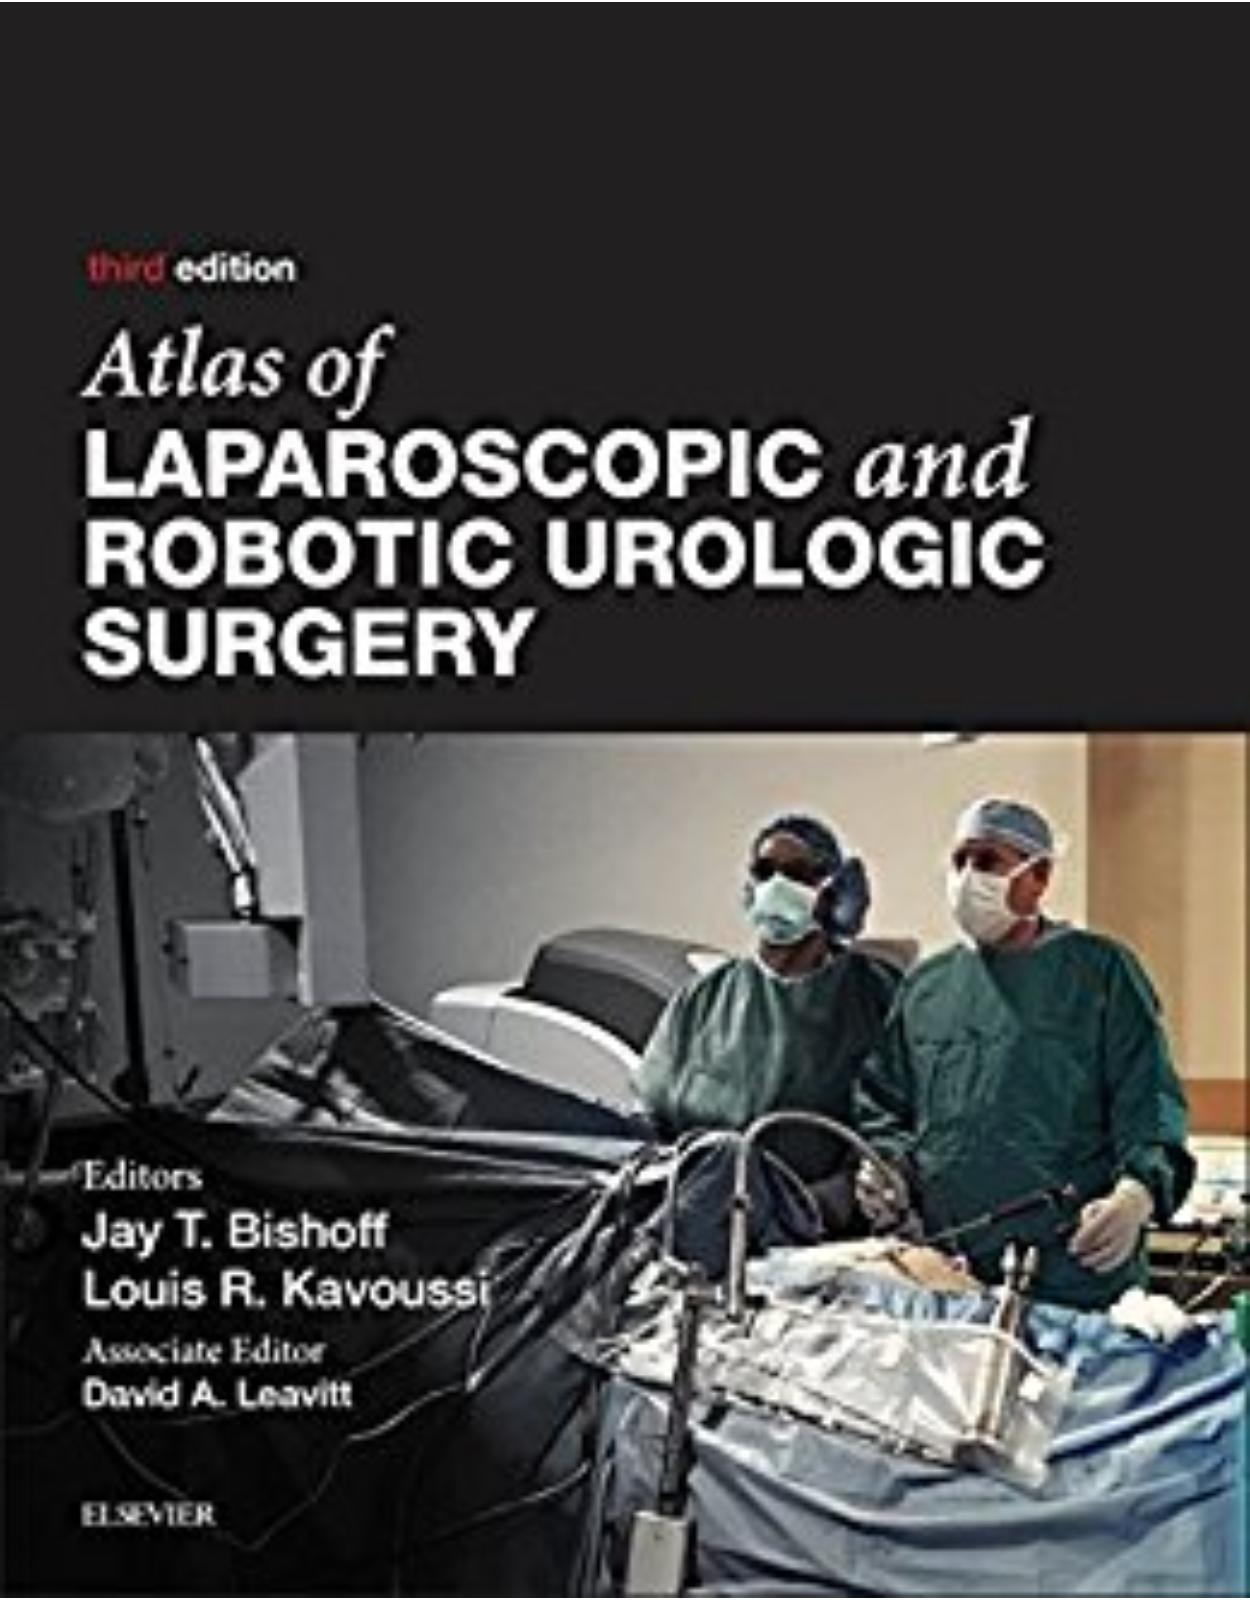 Atlas of Laparoscopic and Robotic Urologic Surgery, 3rd Edition